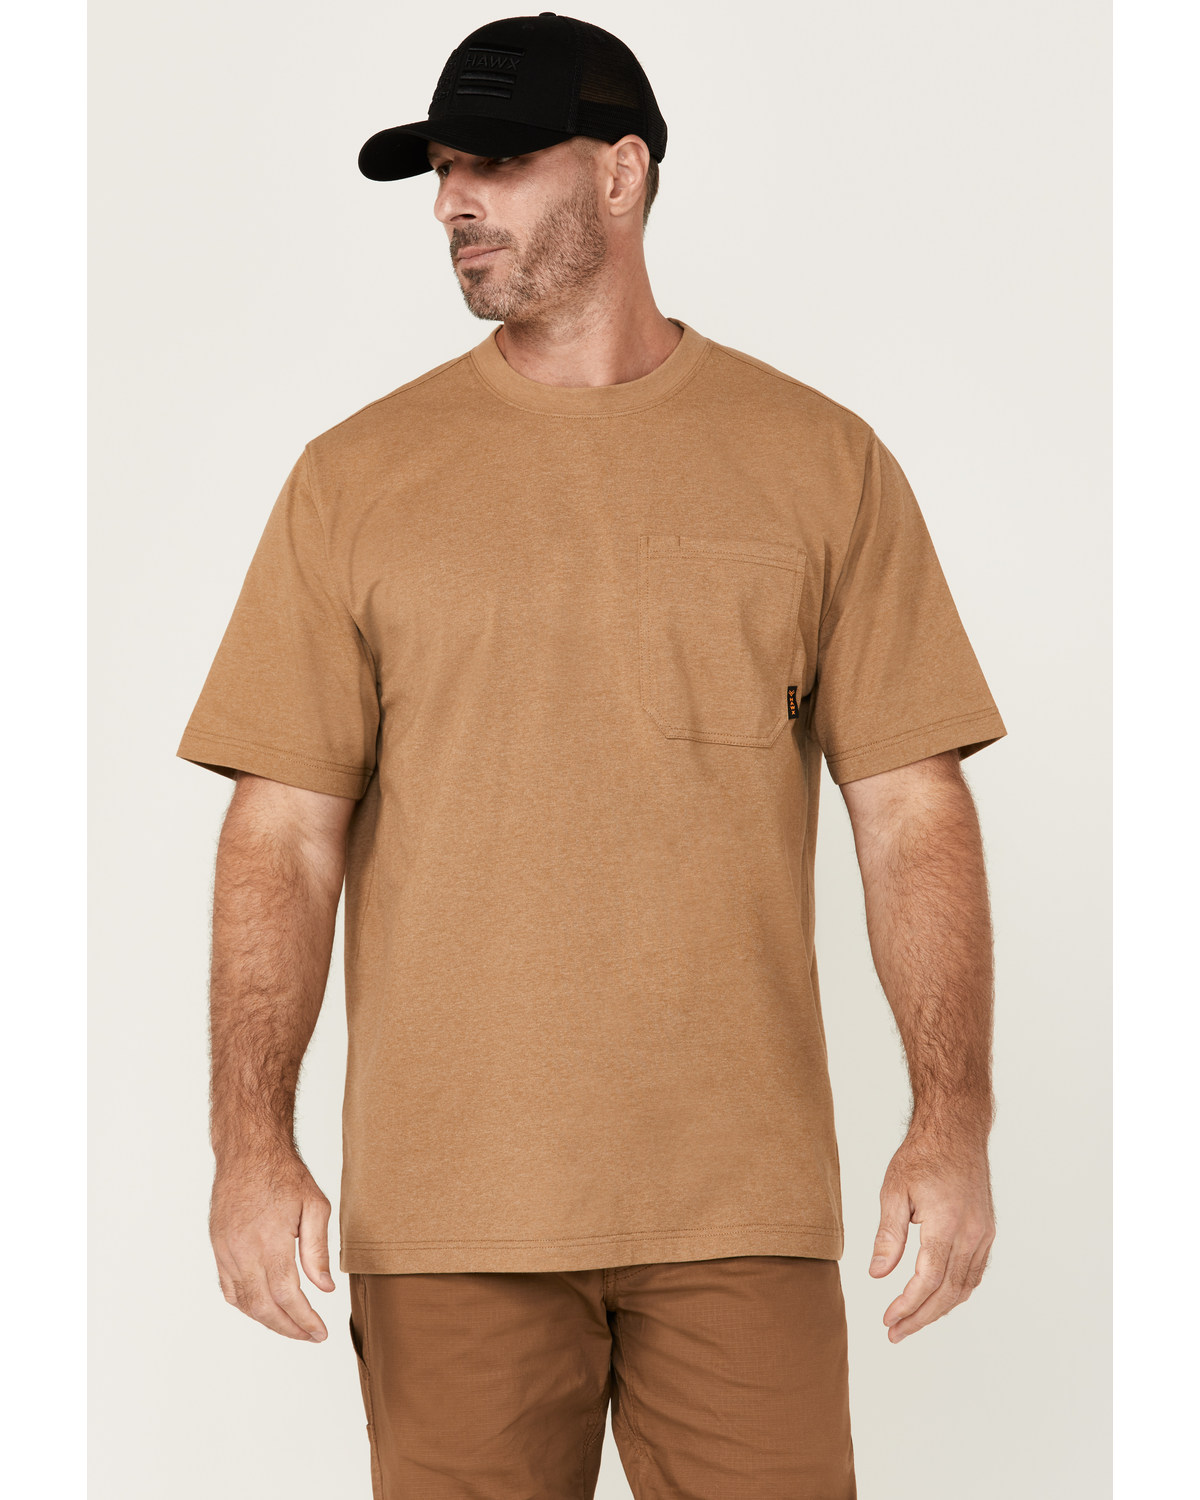 Hawx Men's Forge Solid Short Sleeve Pocket T-Shirt